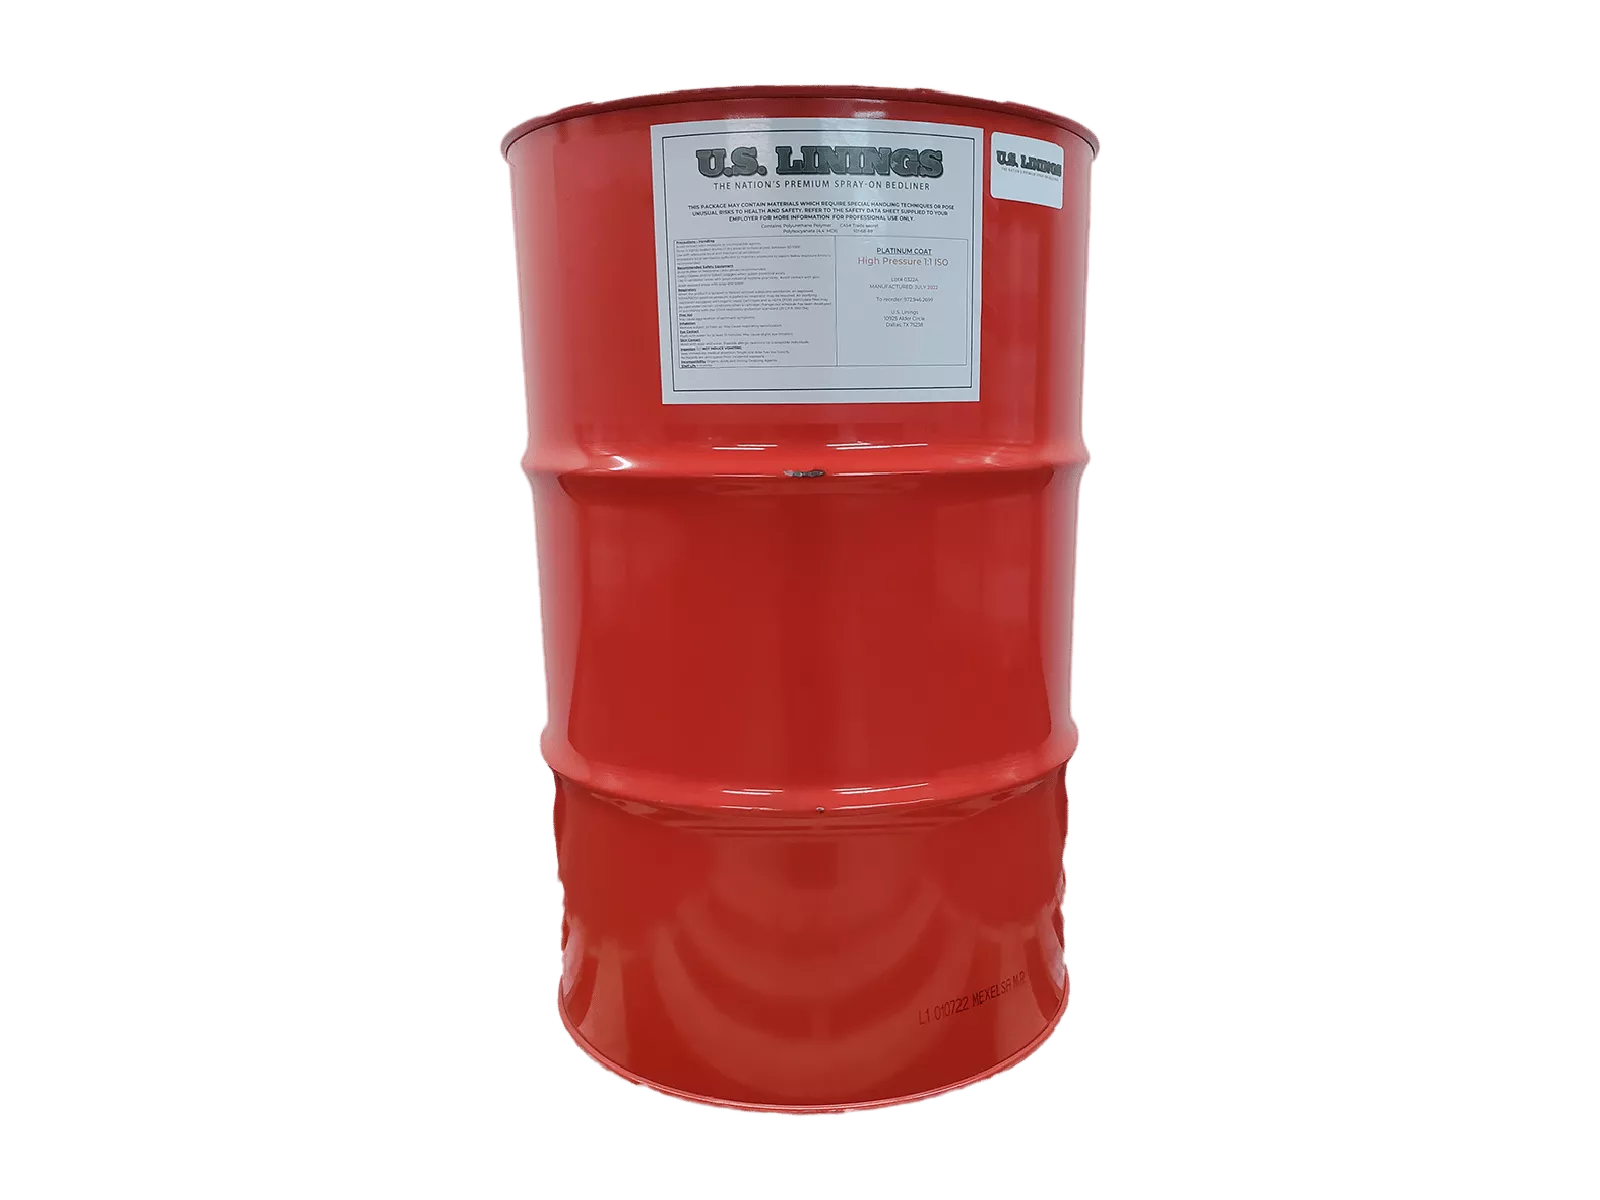 U.S. Linings Chemical 1776 Side A Drum Barrel - Premium Bedliner Chemical